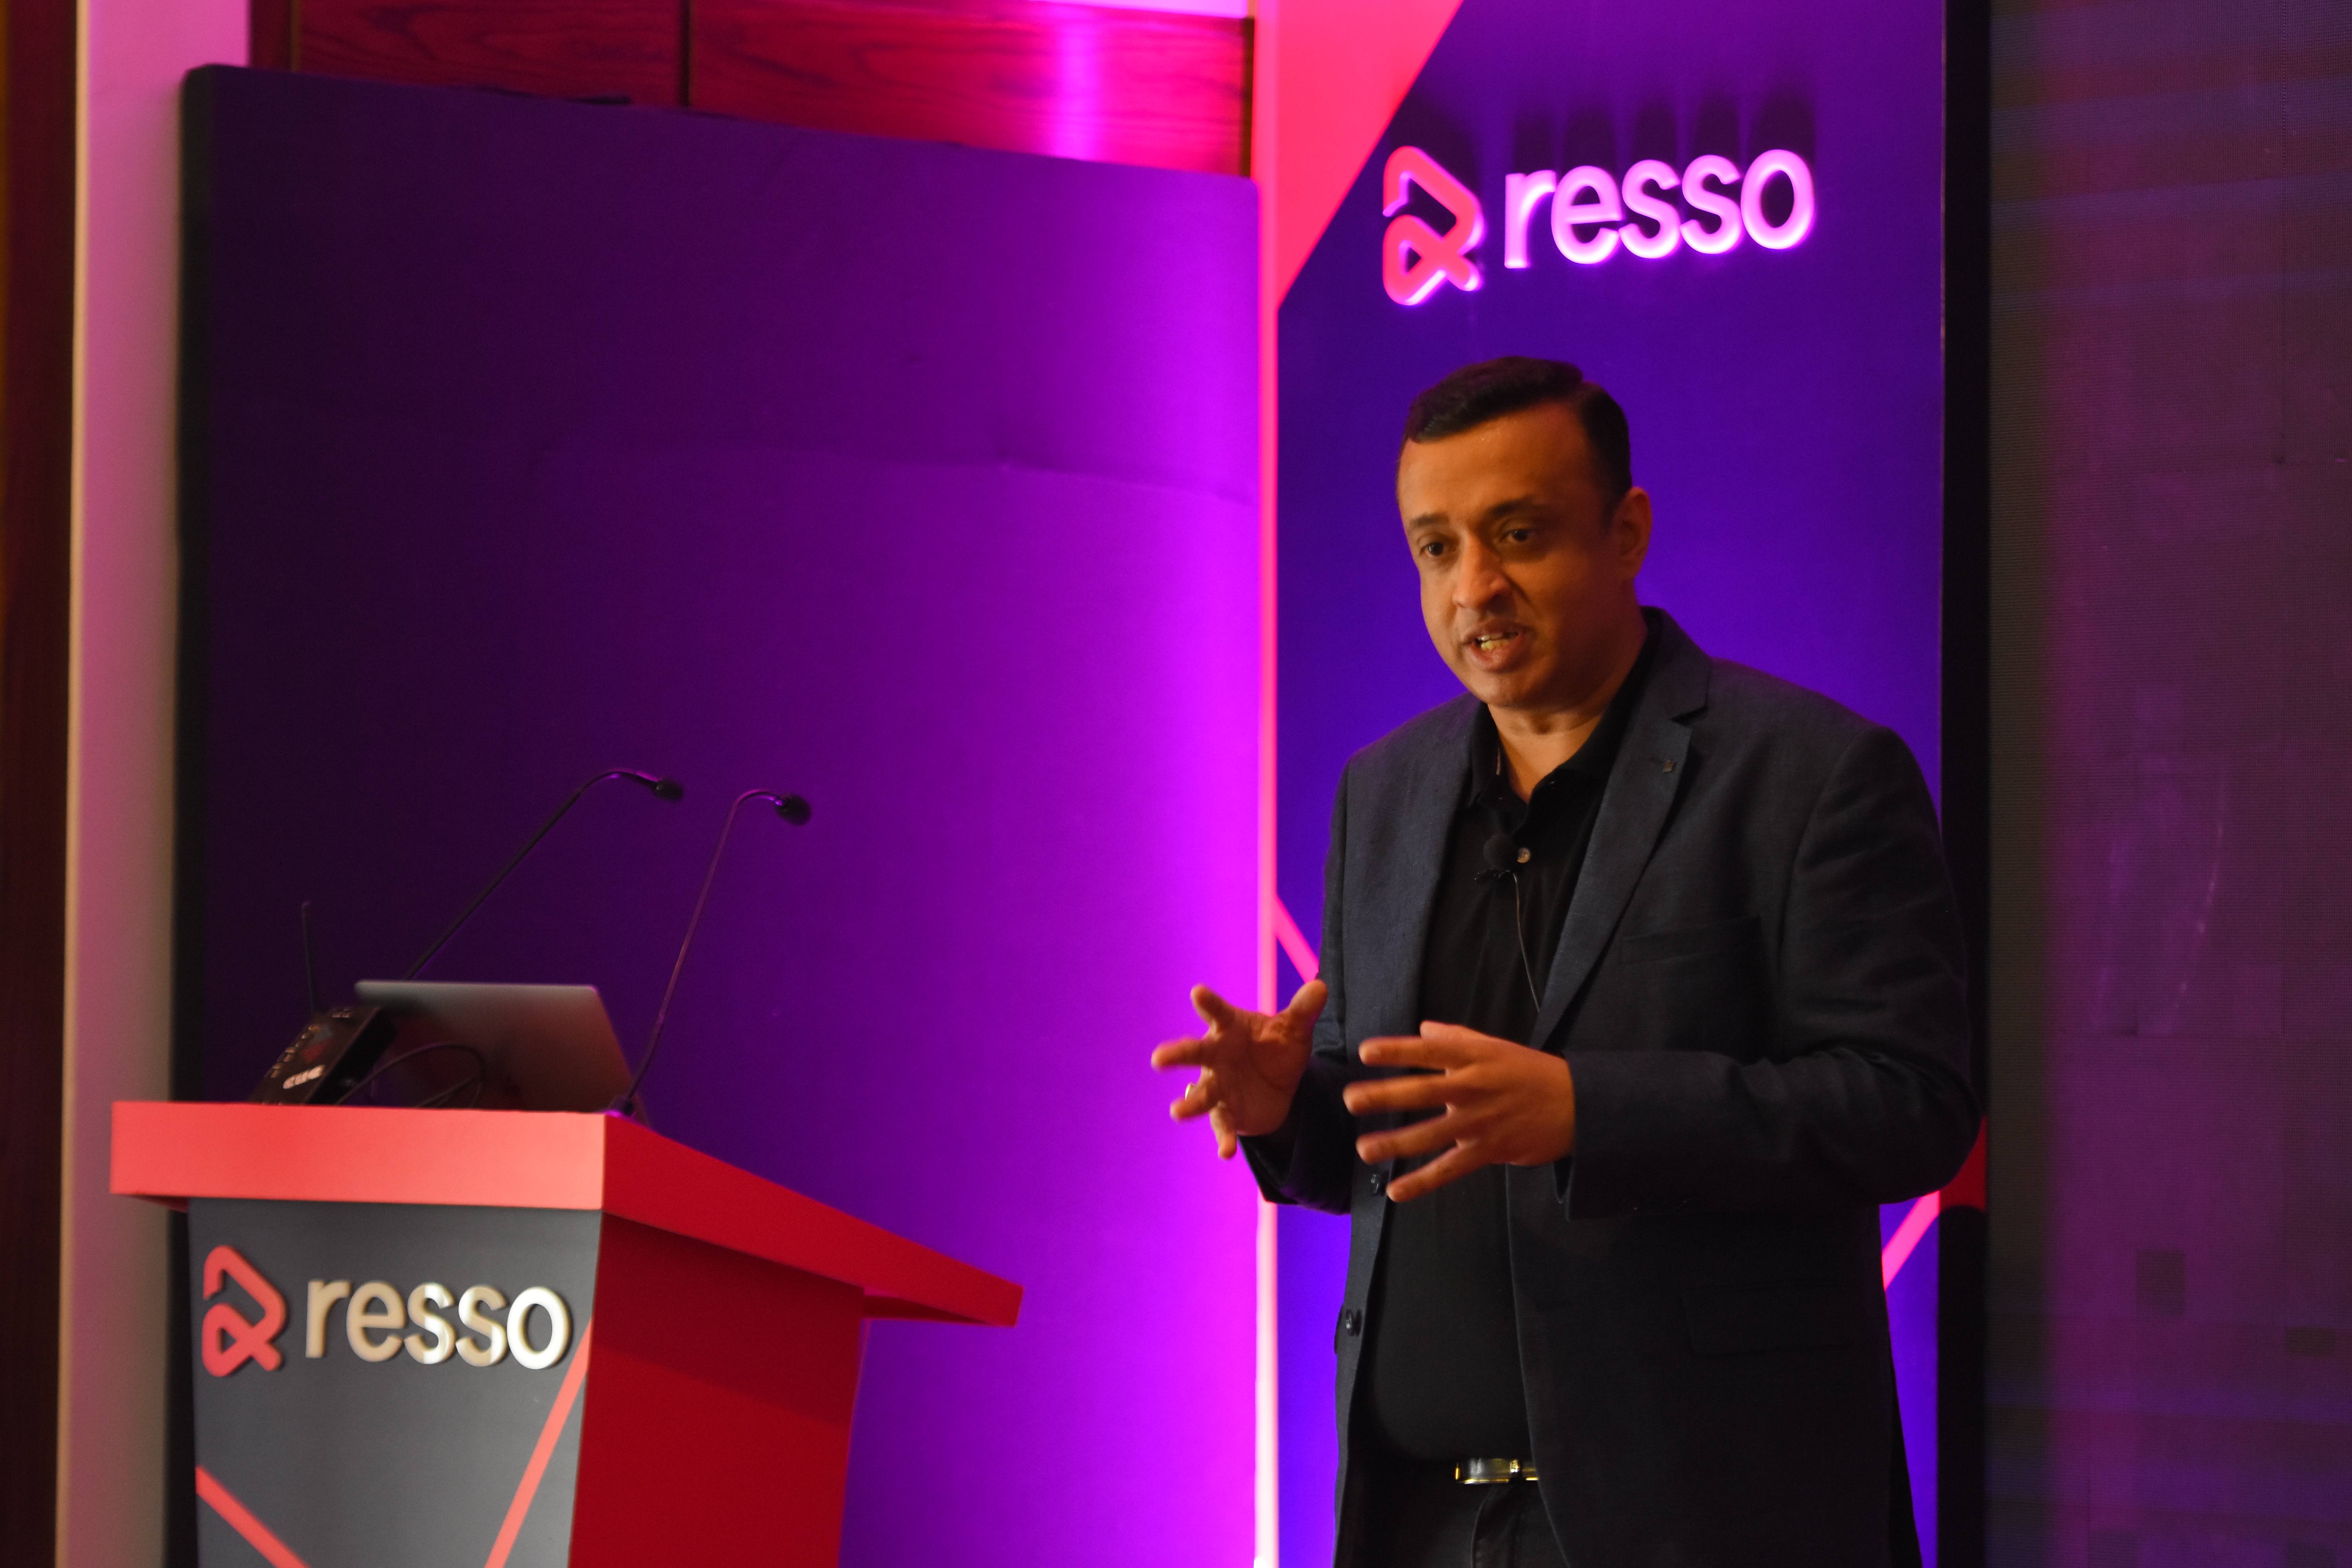 TikTok-firm ByteDance launches Resso